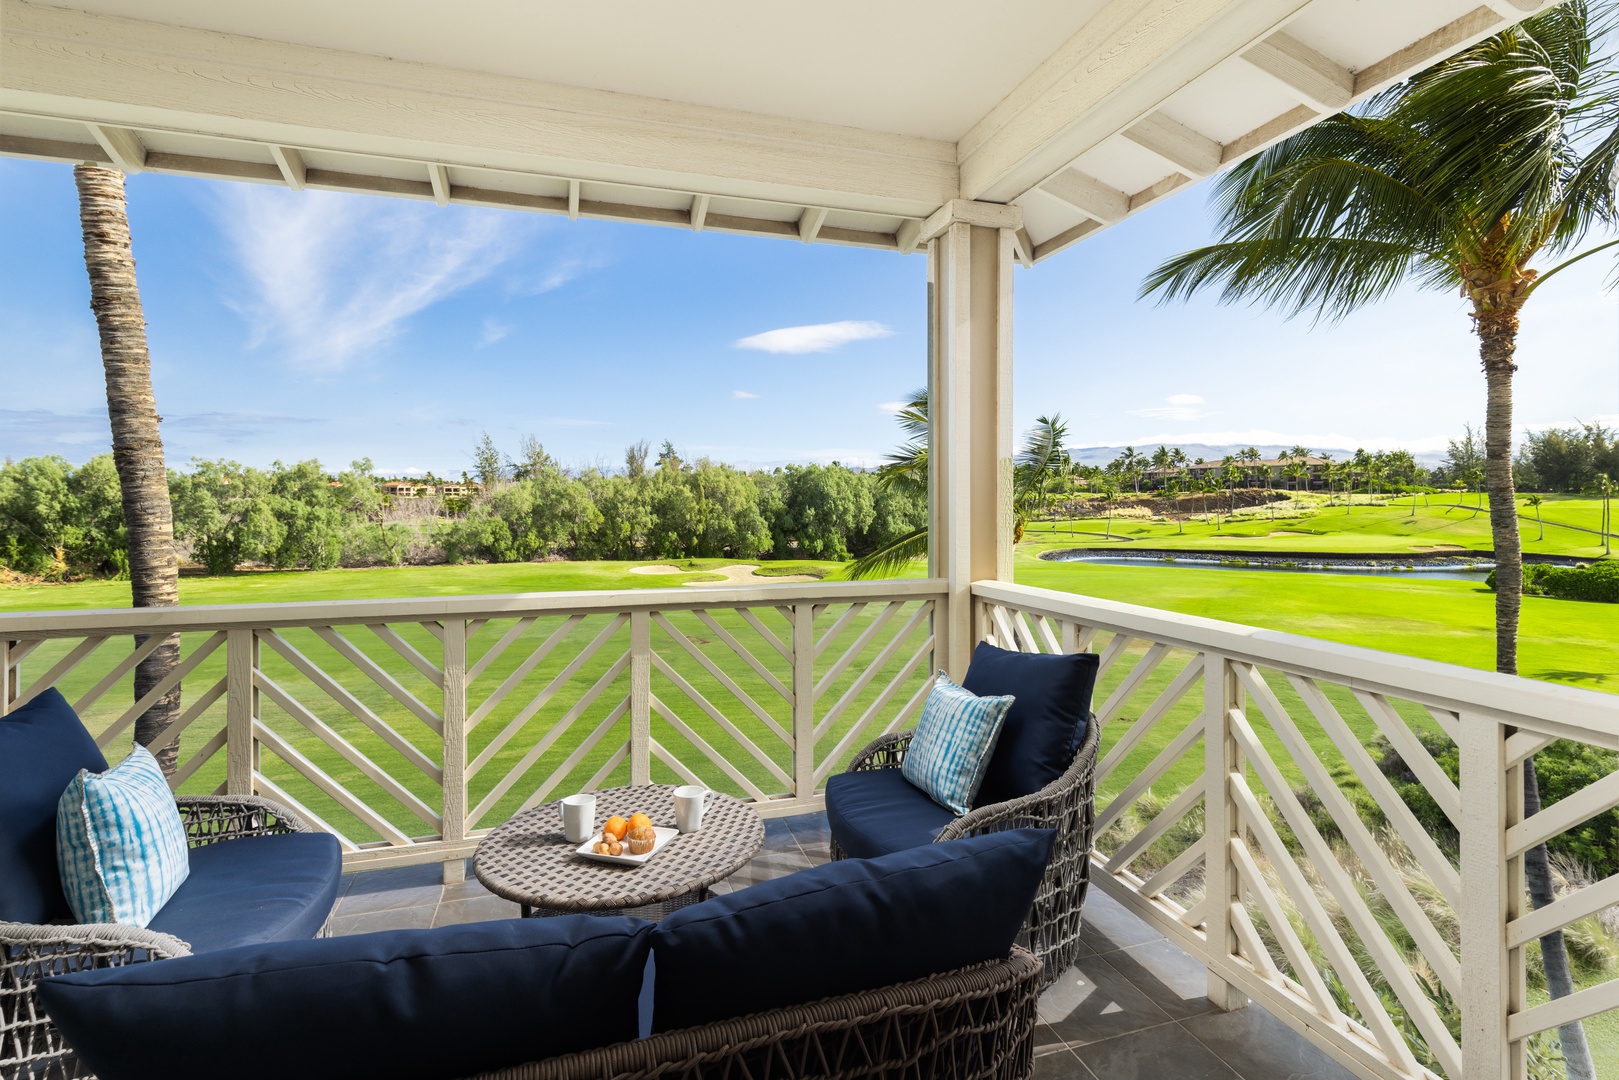 Waikoloa Vacation Rentals, Fairway Villas at Waikoloa Beach Resort E34 - Enjoy alfresco meals and panoramic views on the lanai